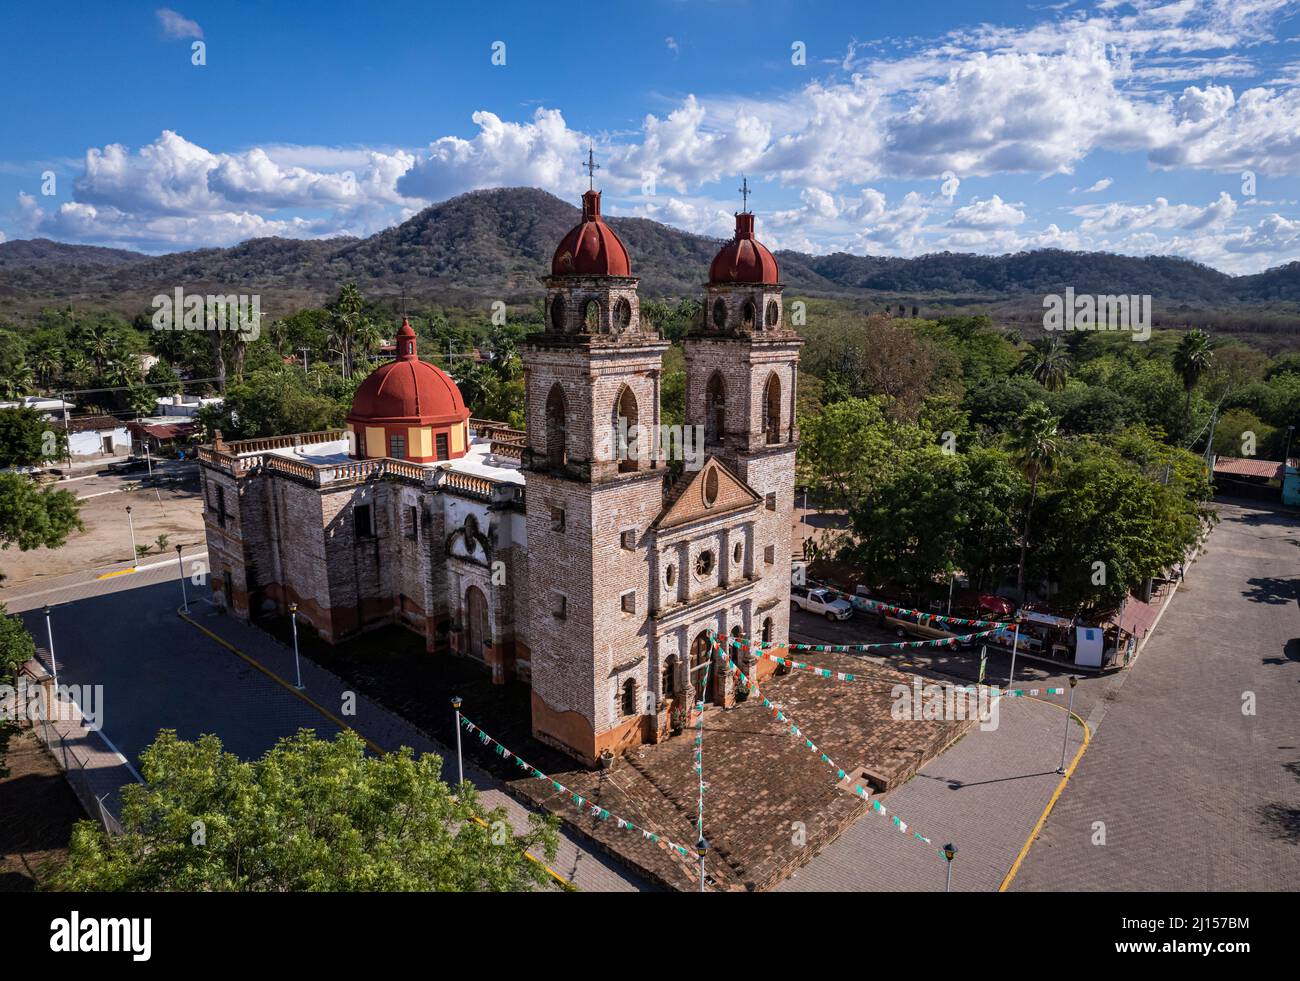 Die Kirche des Dorfes Imala in der Nähe der Stadt Culiacan in Sinaloa, Mexiko. Stockfoto